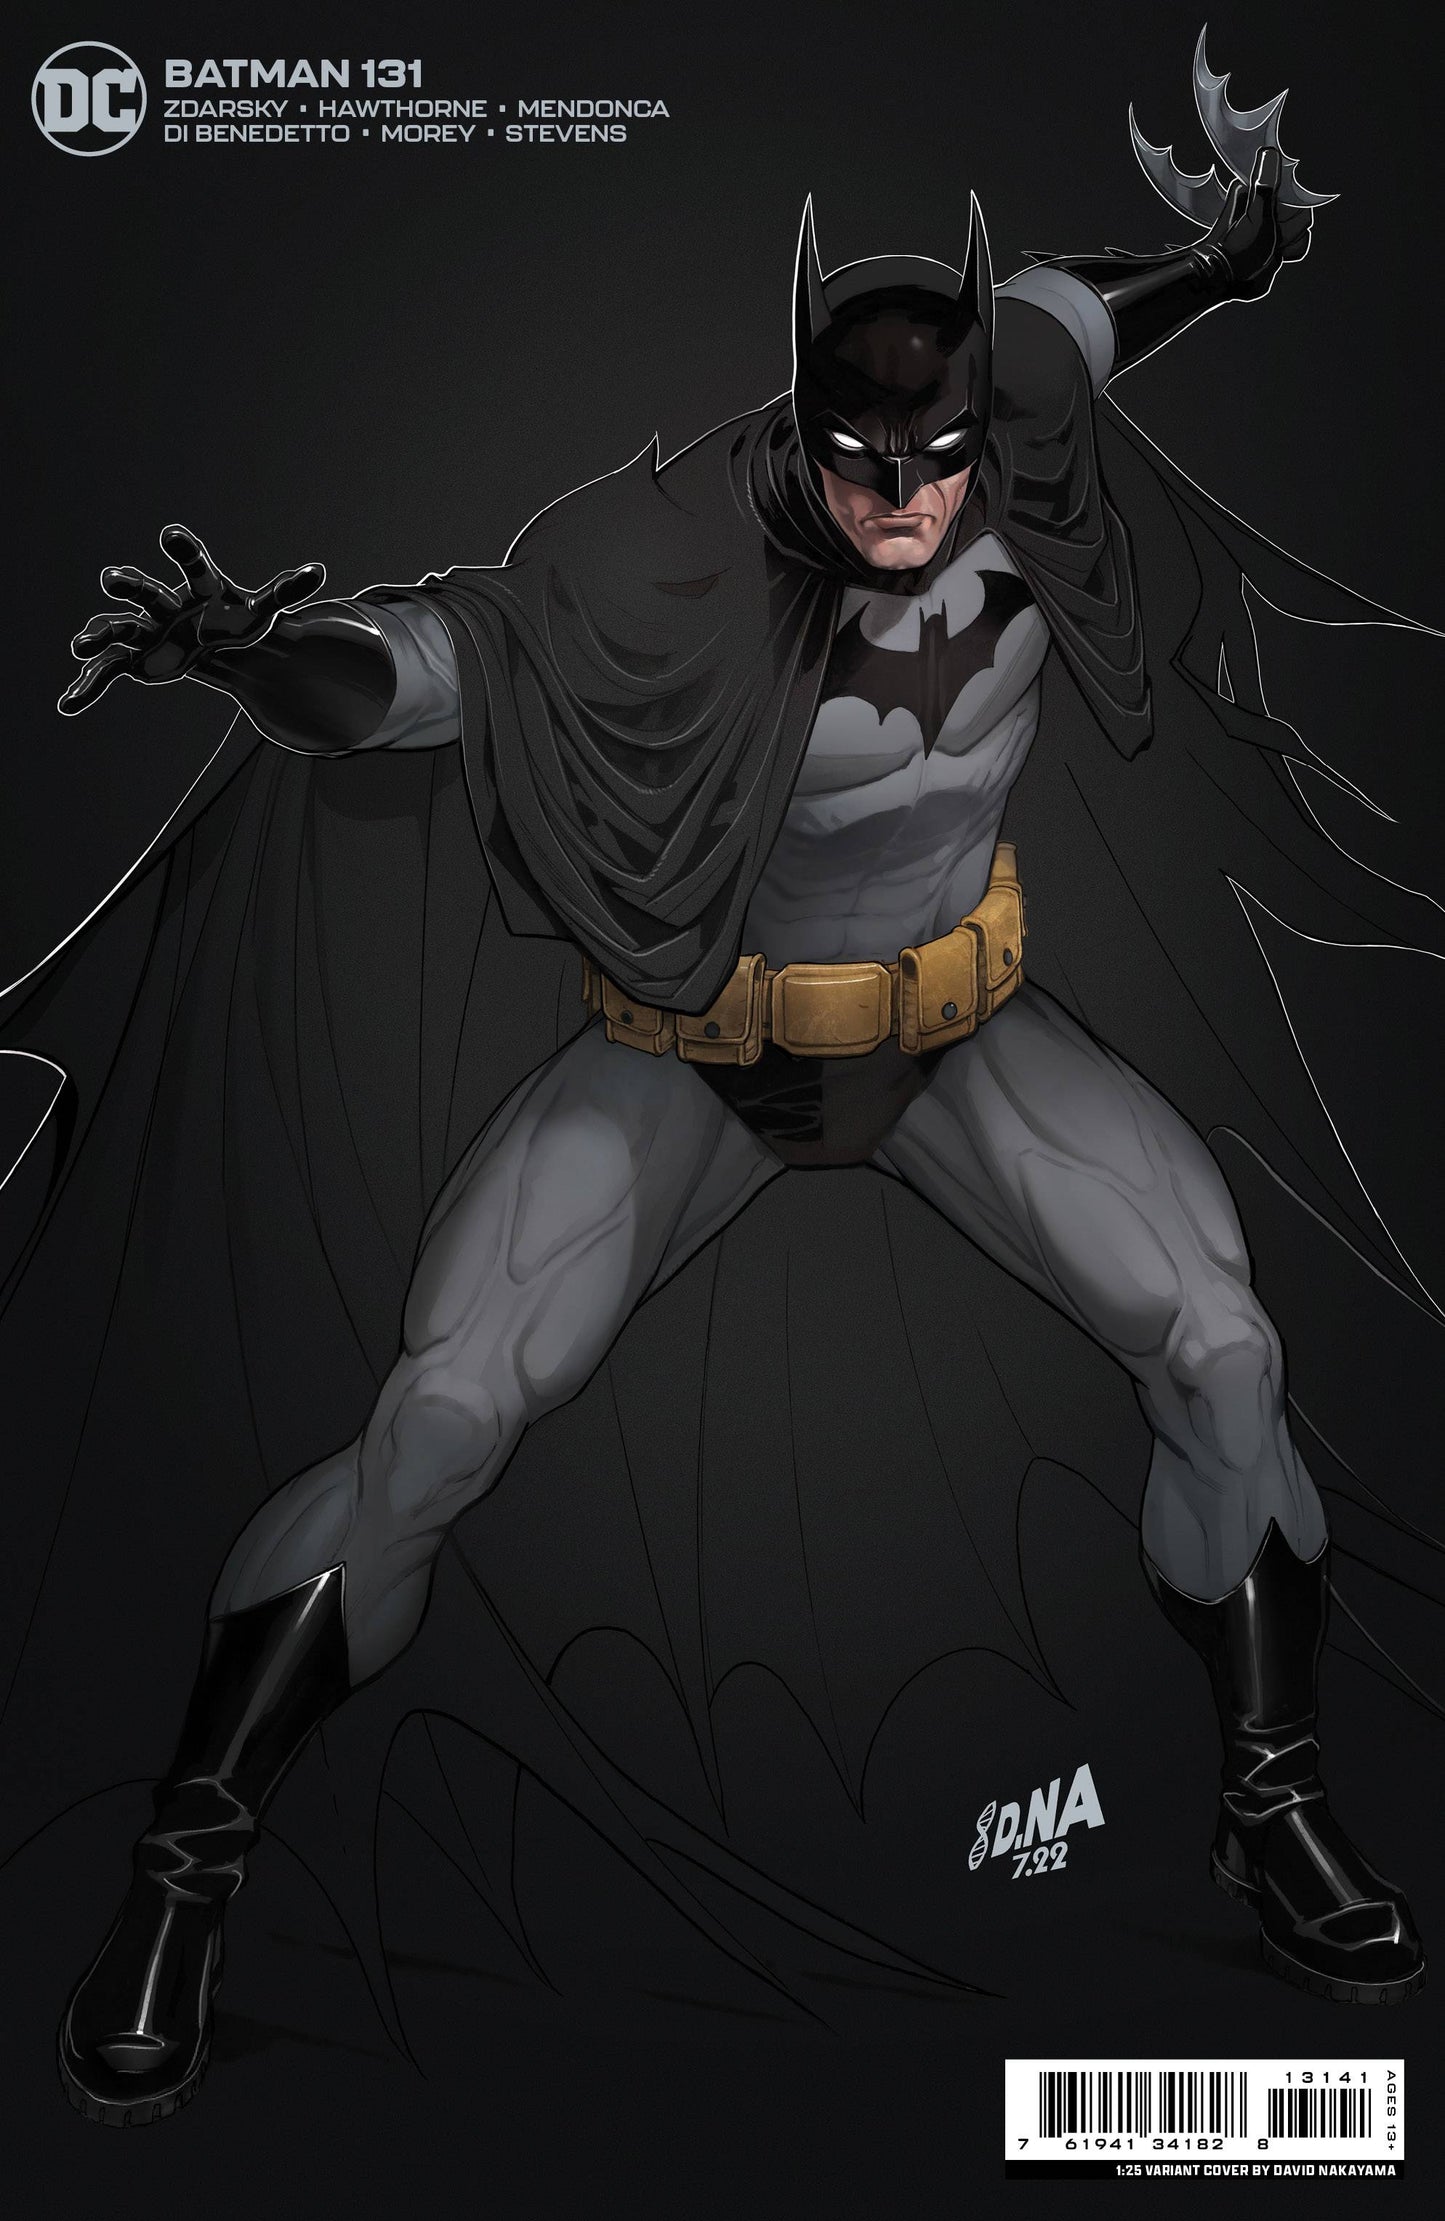 BATMAN #131